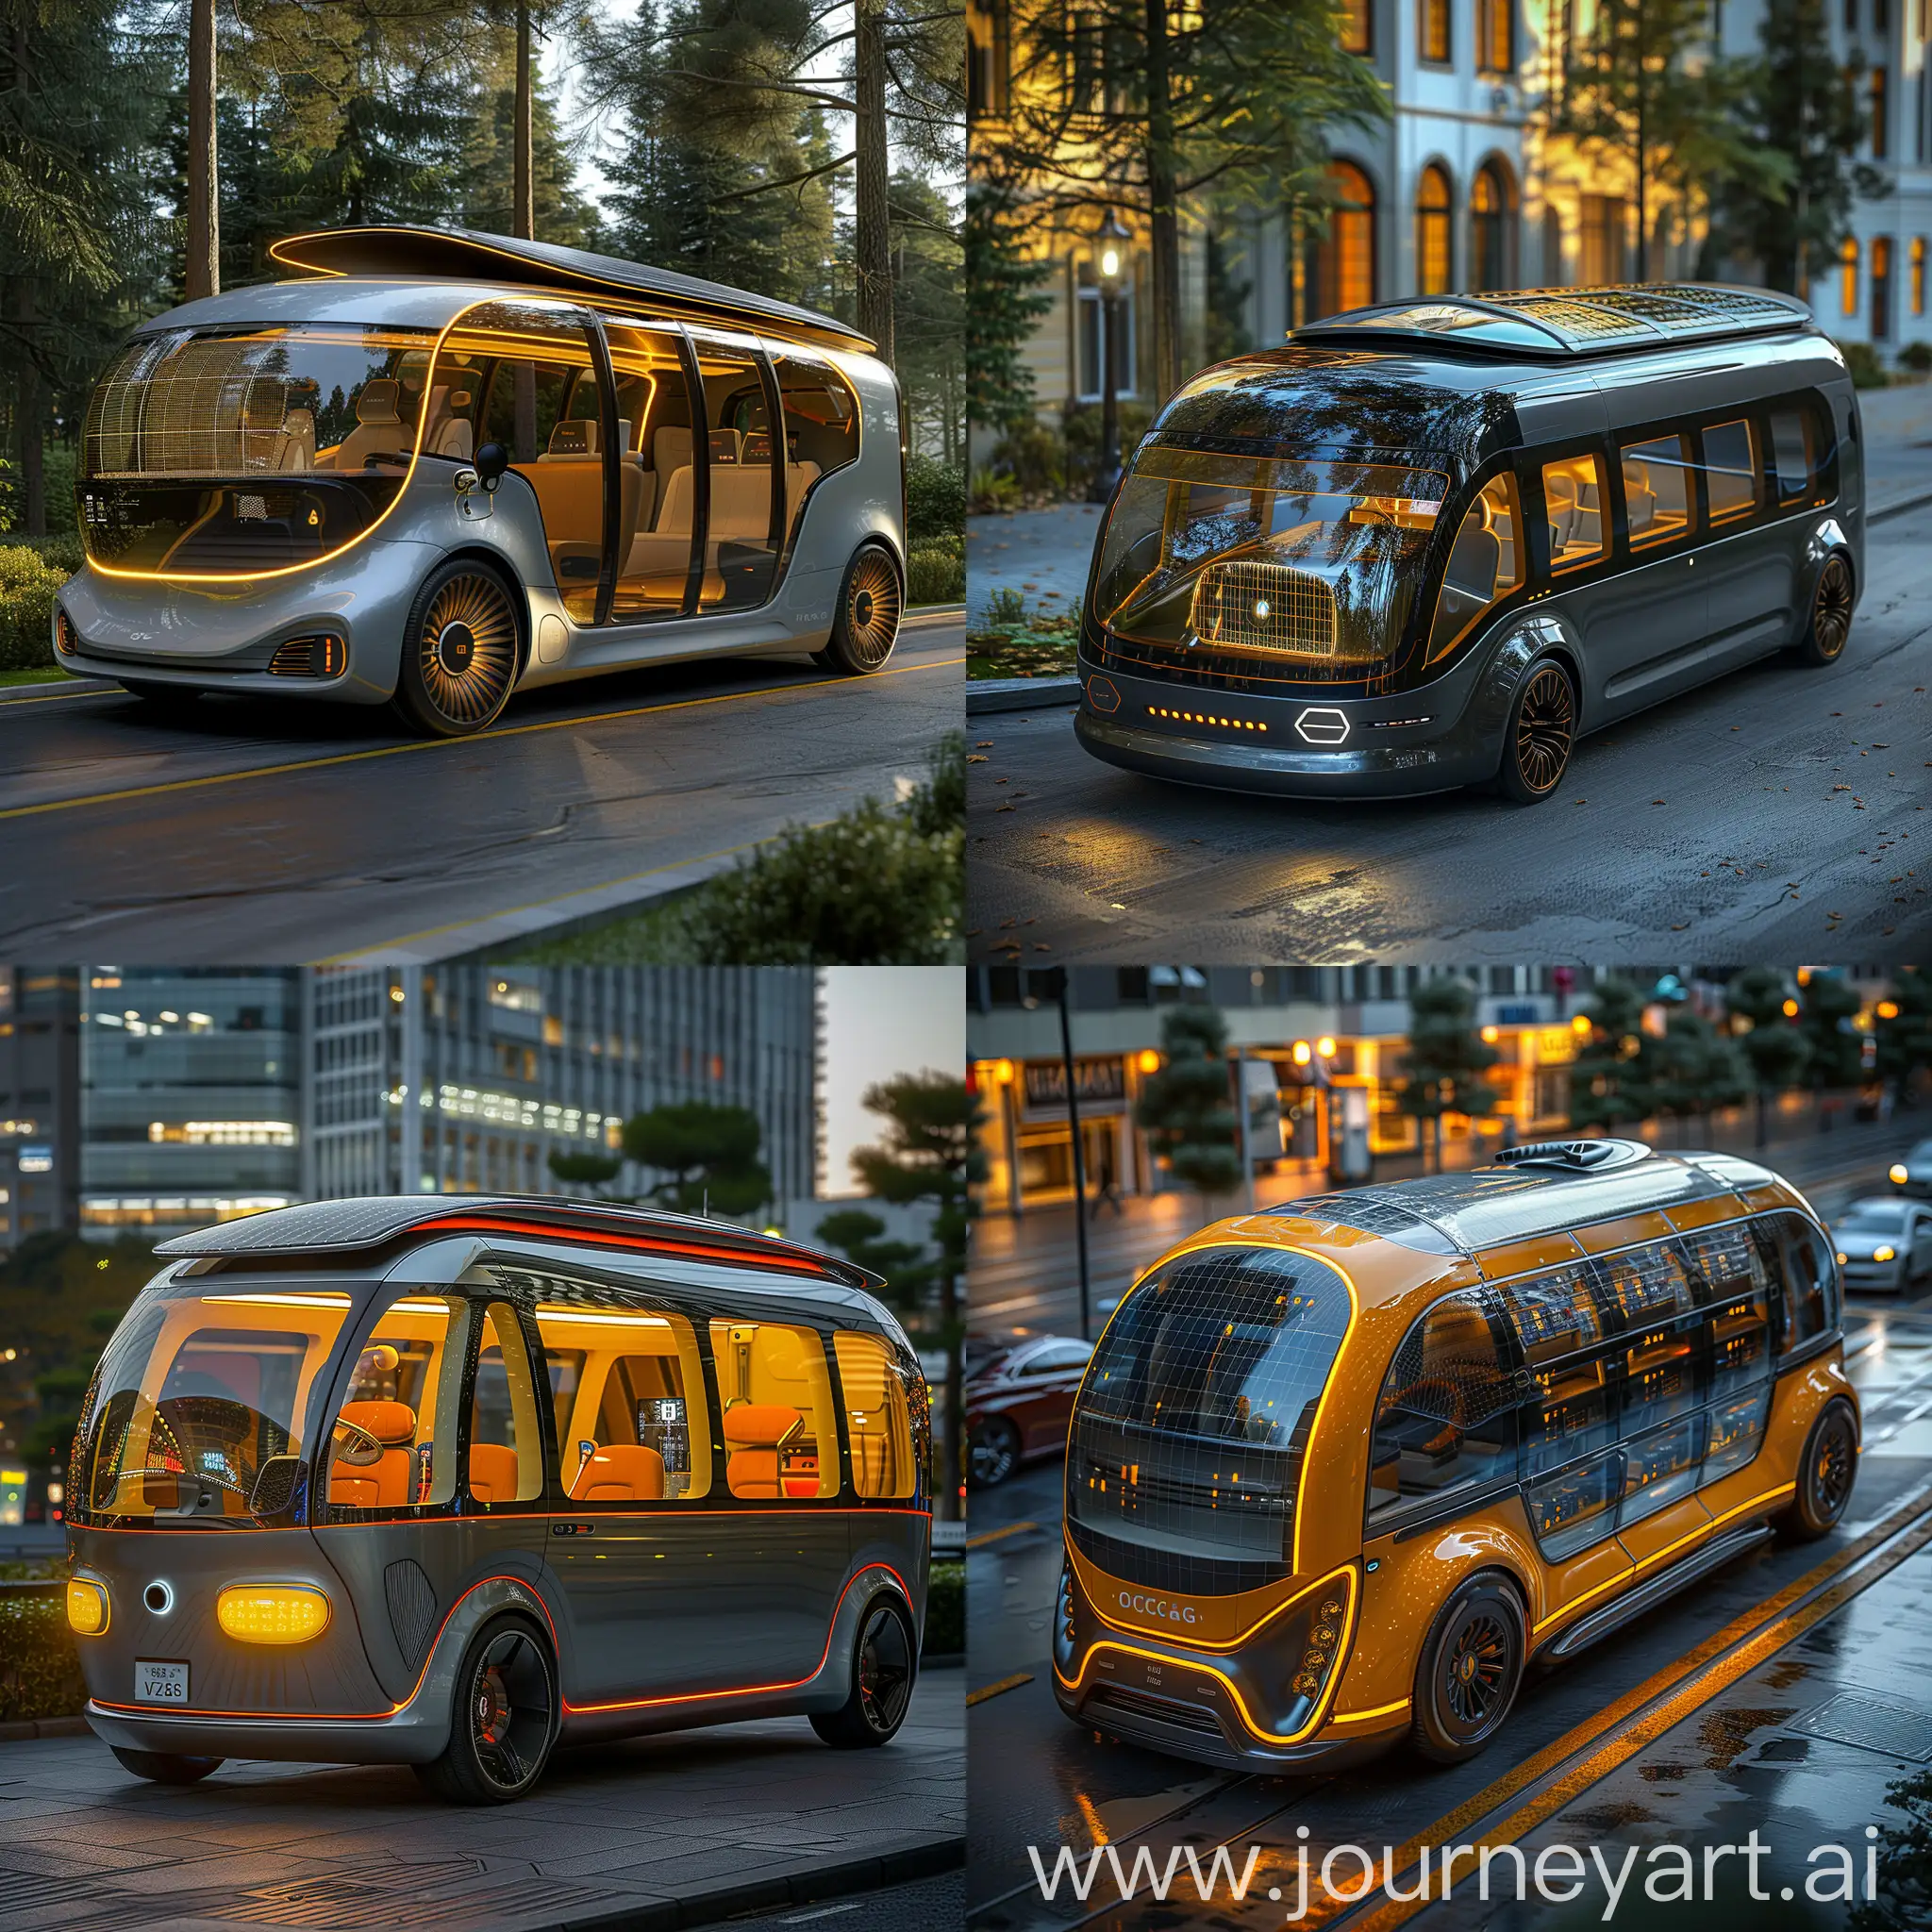 Futuristic-SelfCharging-Solar-Microbus-with-Autonomous-Driving